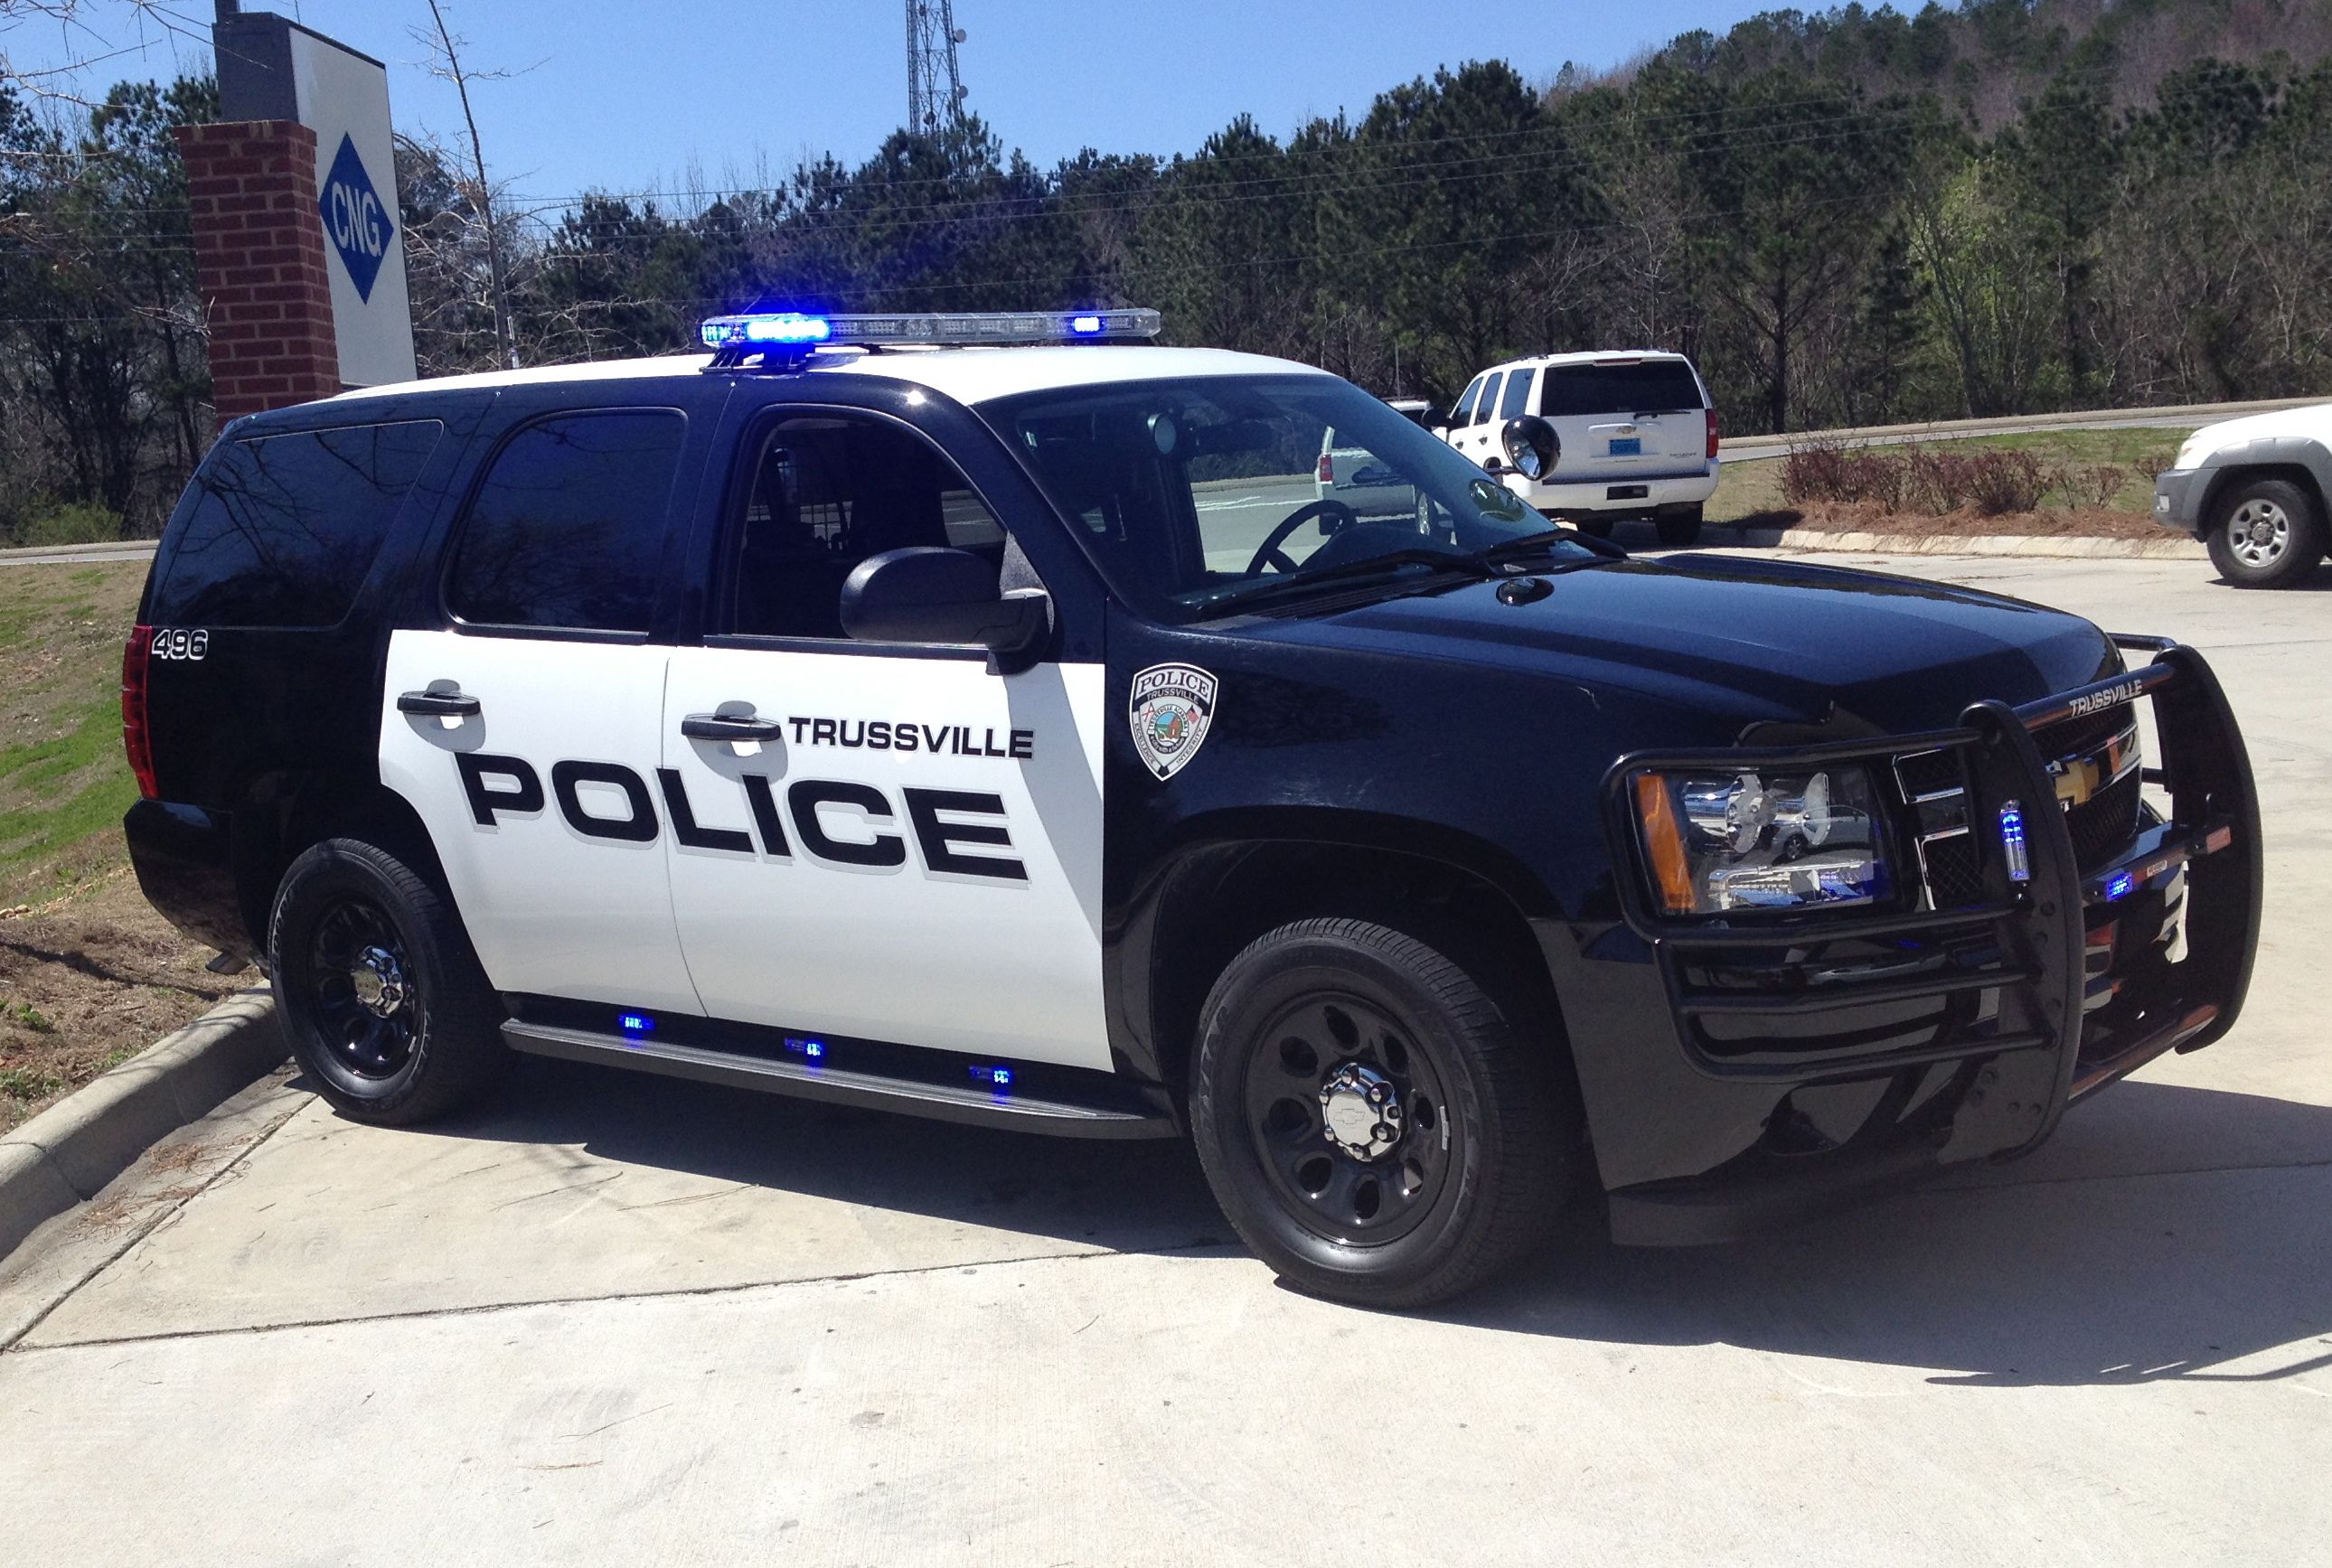 2 vehicle break-ins in Trussville on Monday, police urge caution